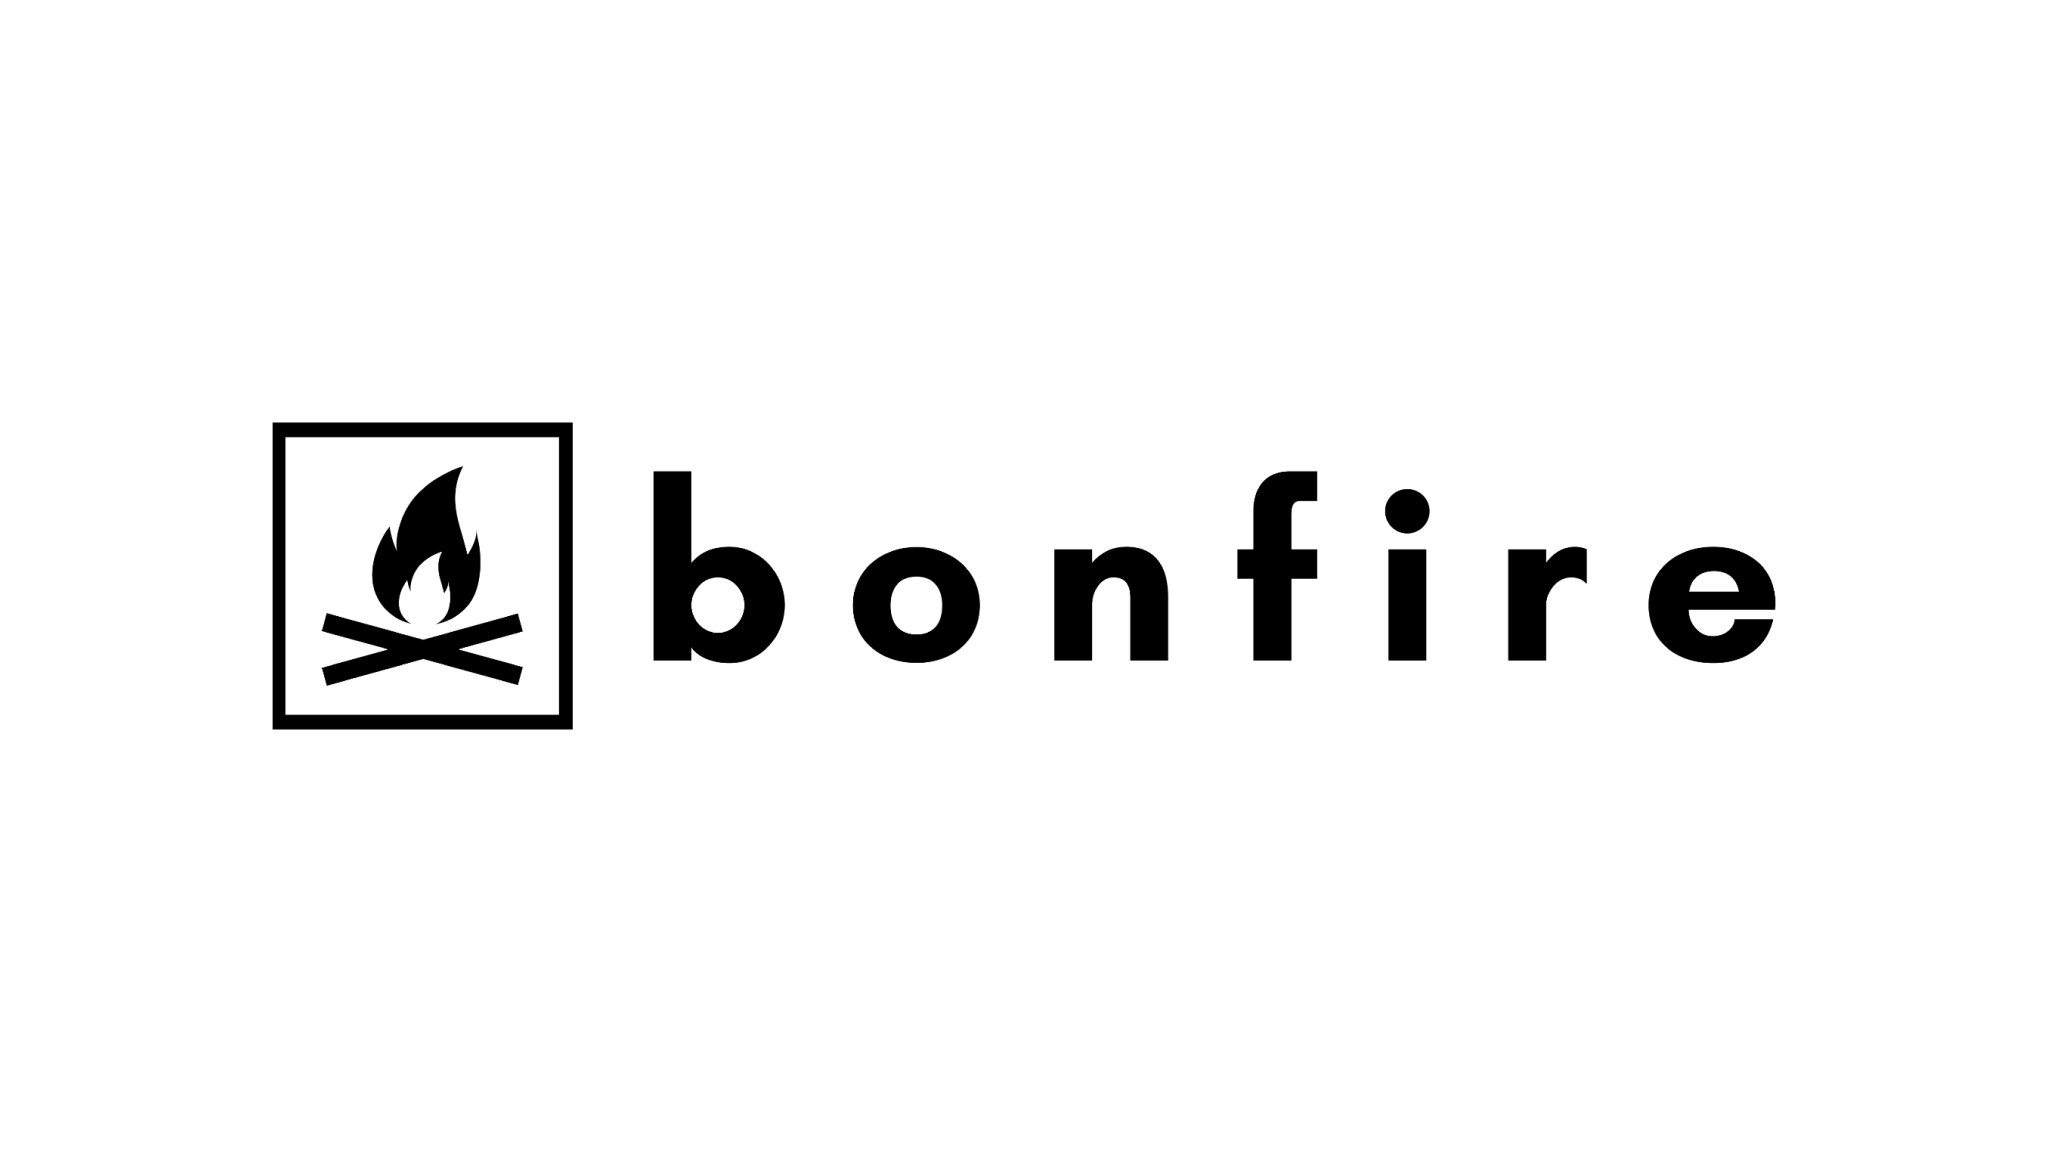 Bonfire Marketing Ignites Growth with Lead Prosper's Feature-Rich Platform